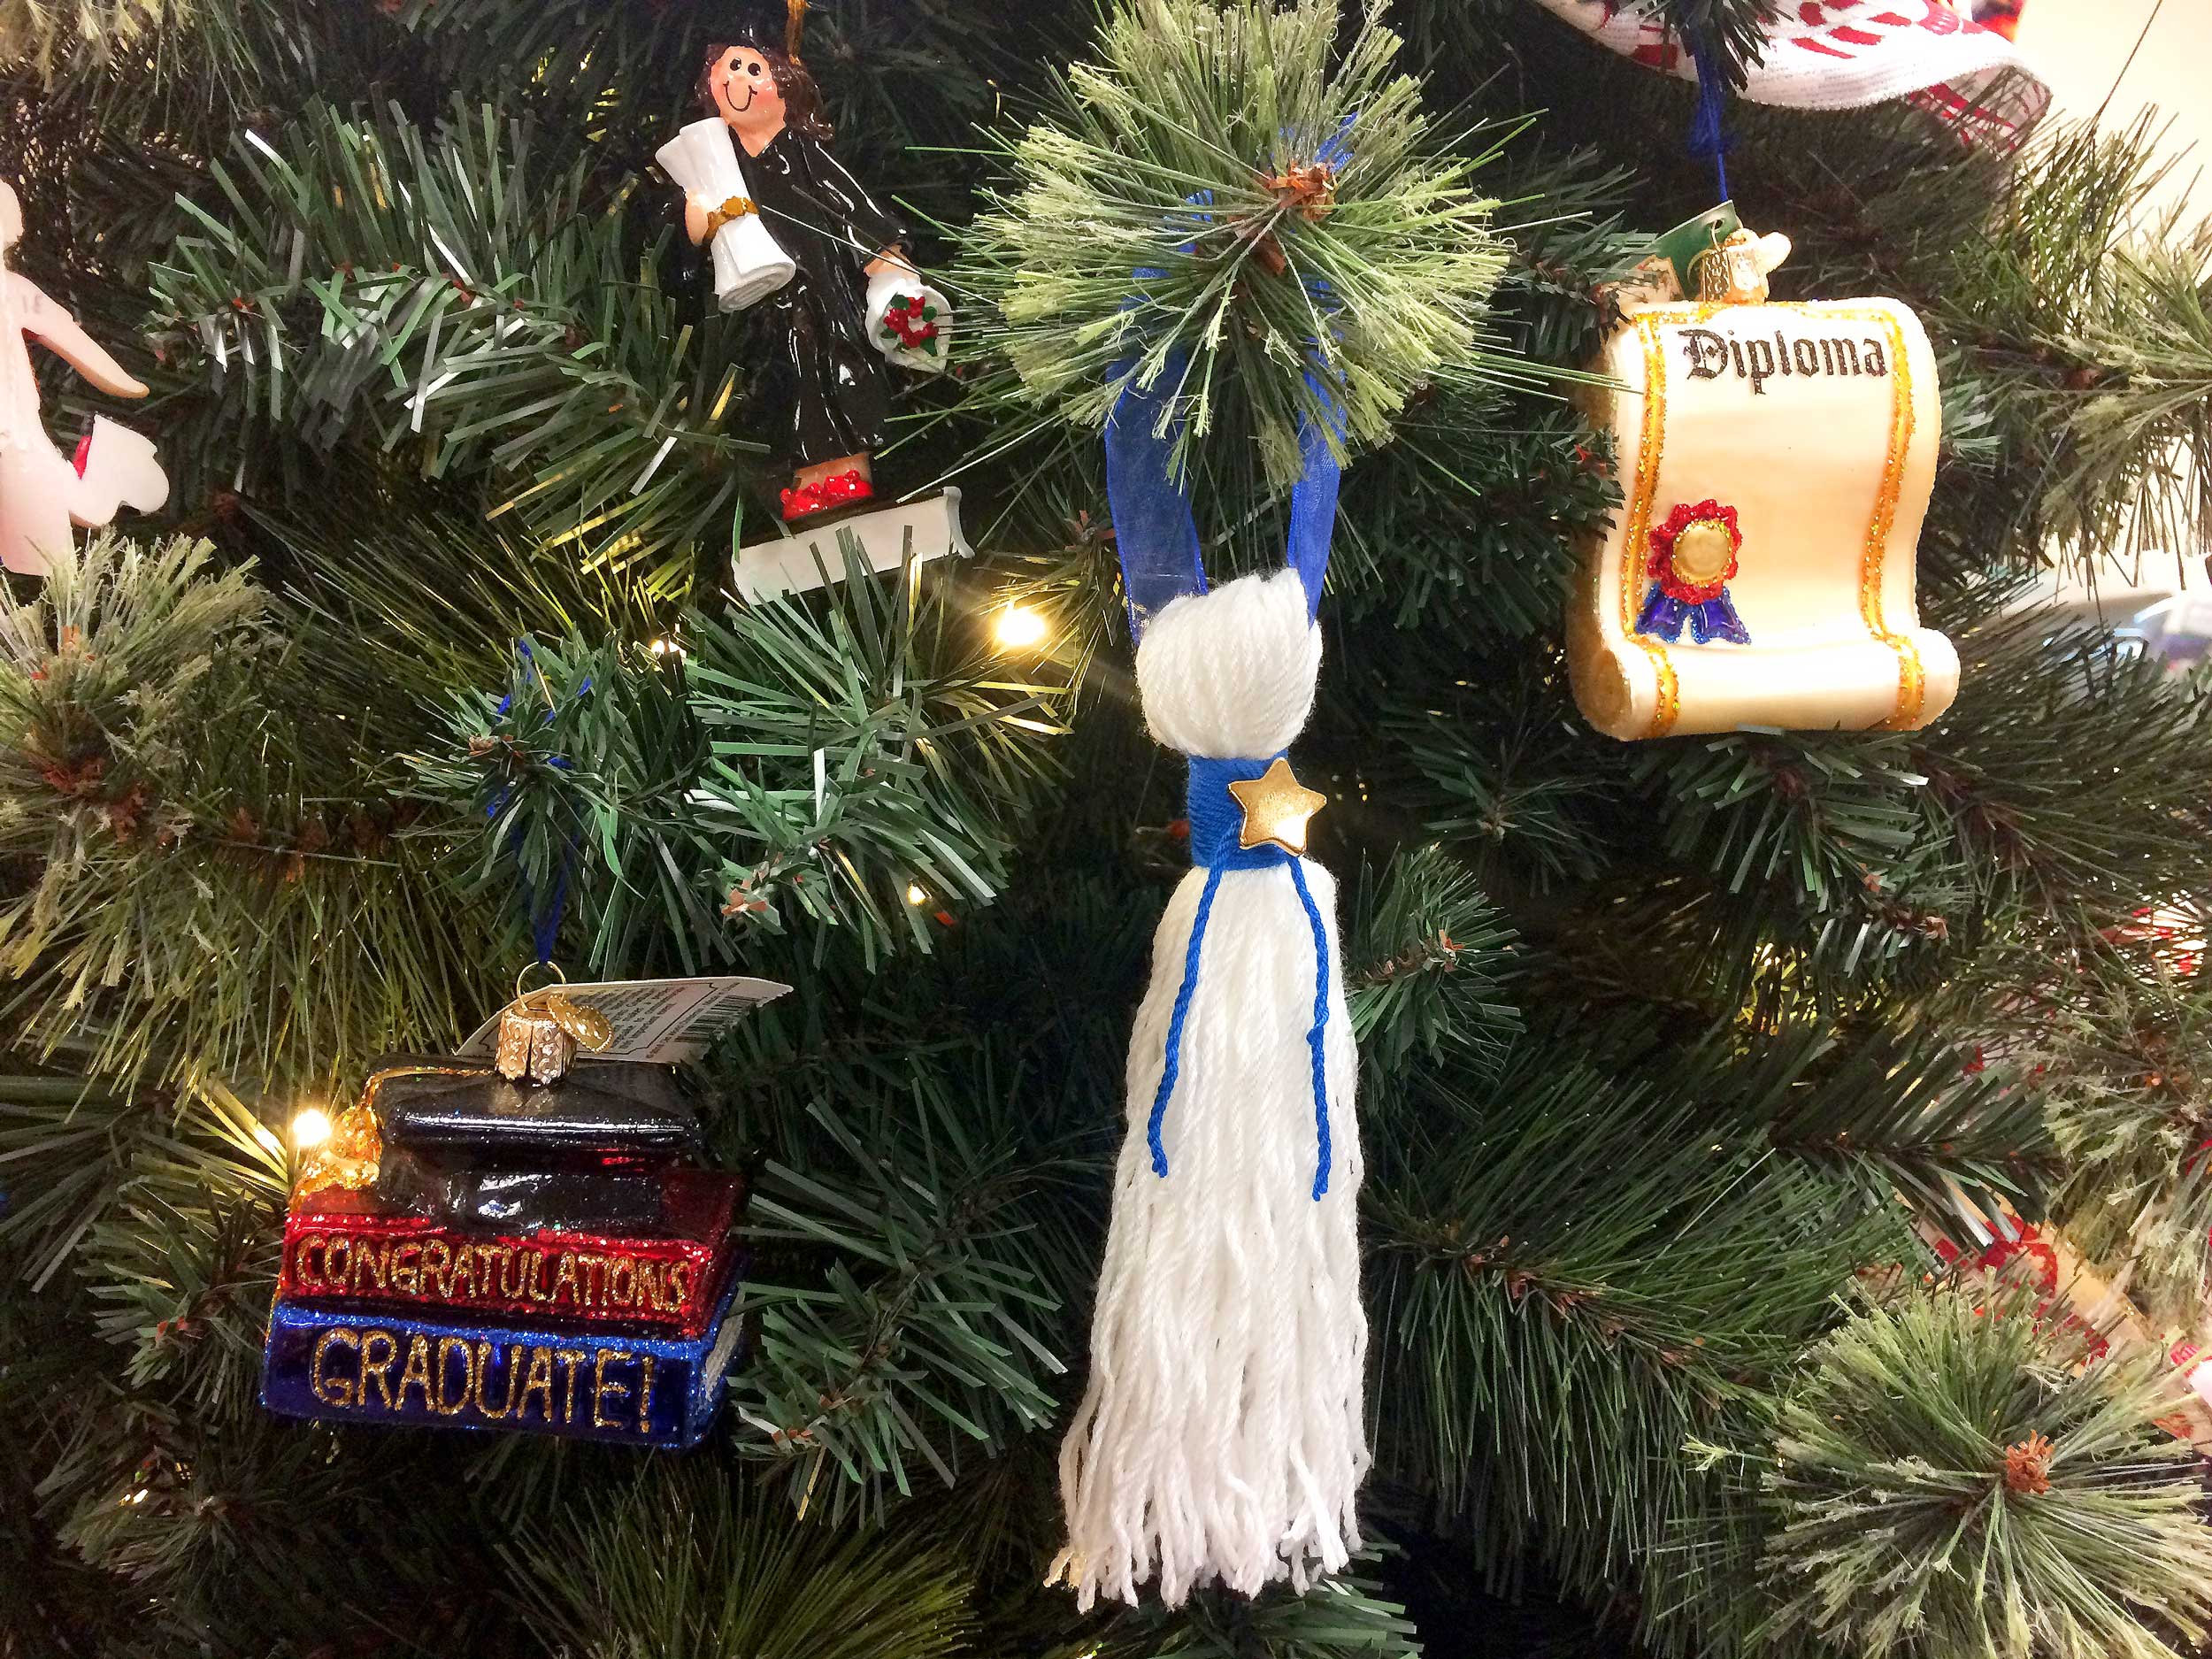 DIY Graduation Tassel hanging from Christmas Tree | OrnamentShop.com